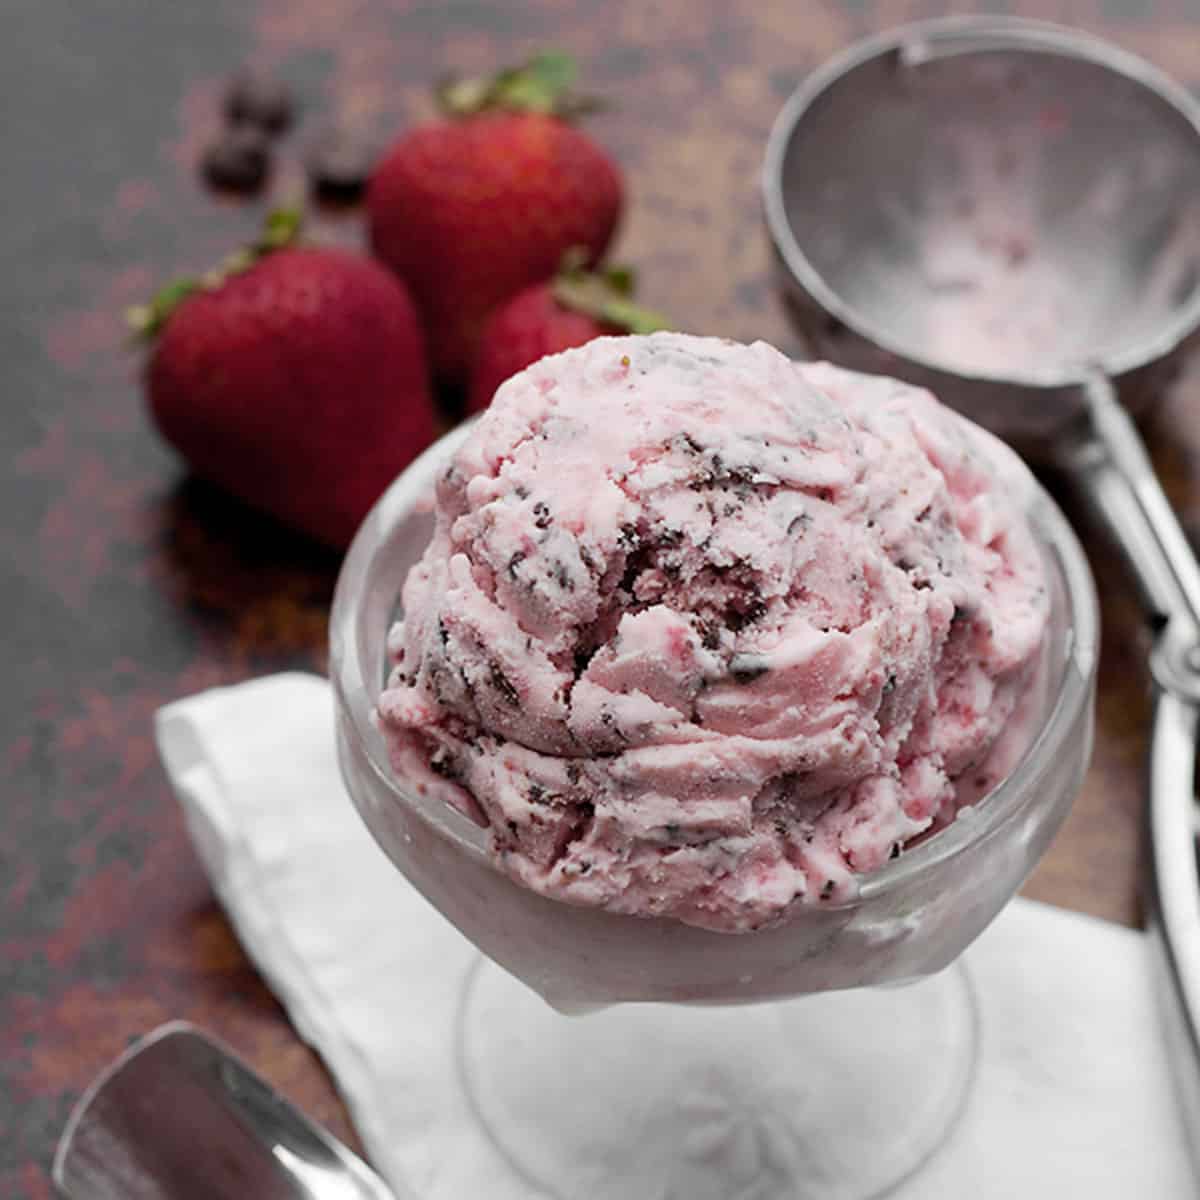 Why Do I Like Strawberry Ice Cream?